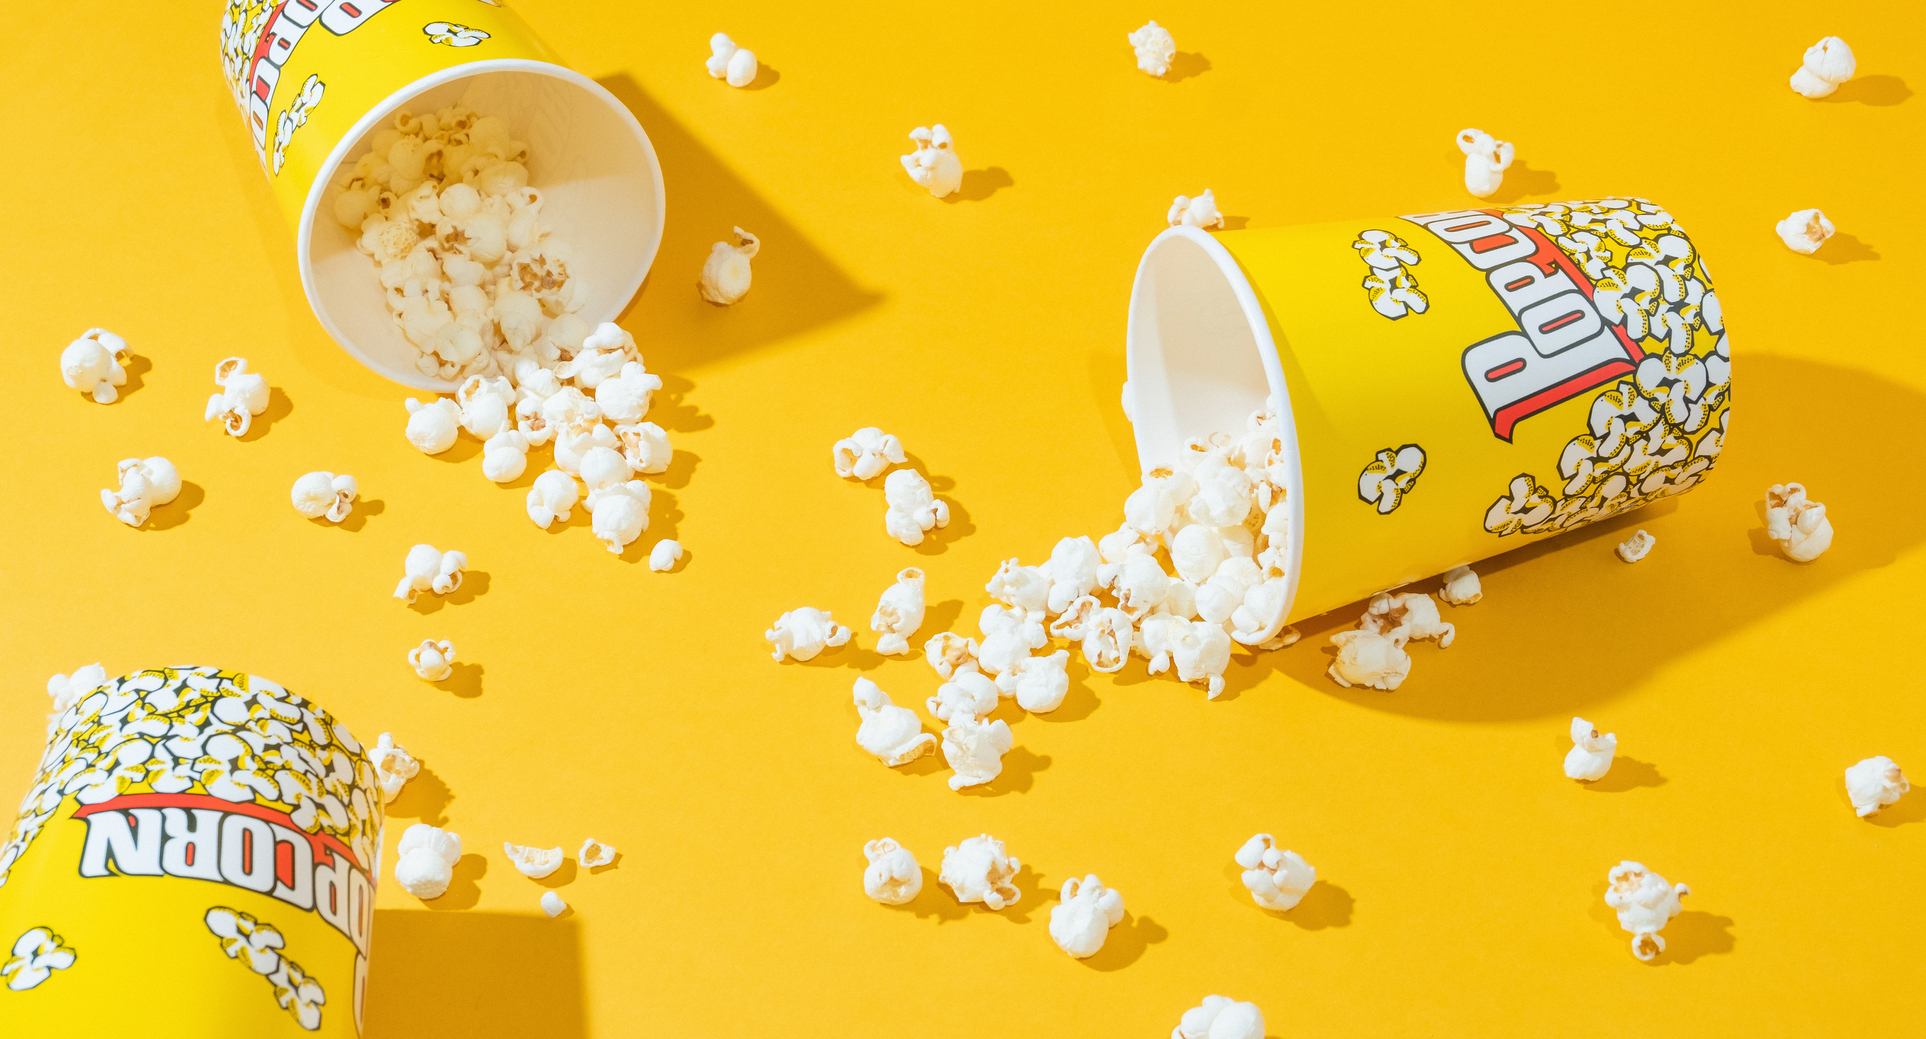 Popcorn bucket / Popcorn on yellow background.